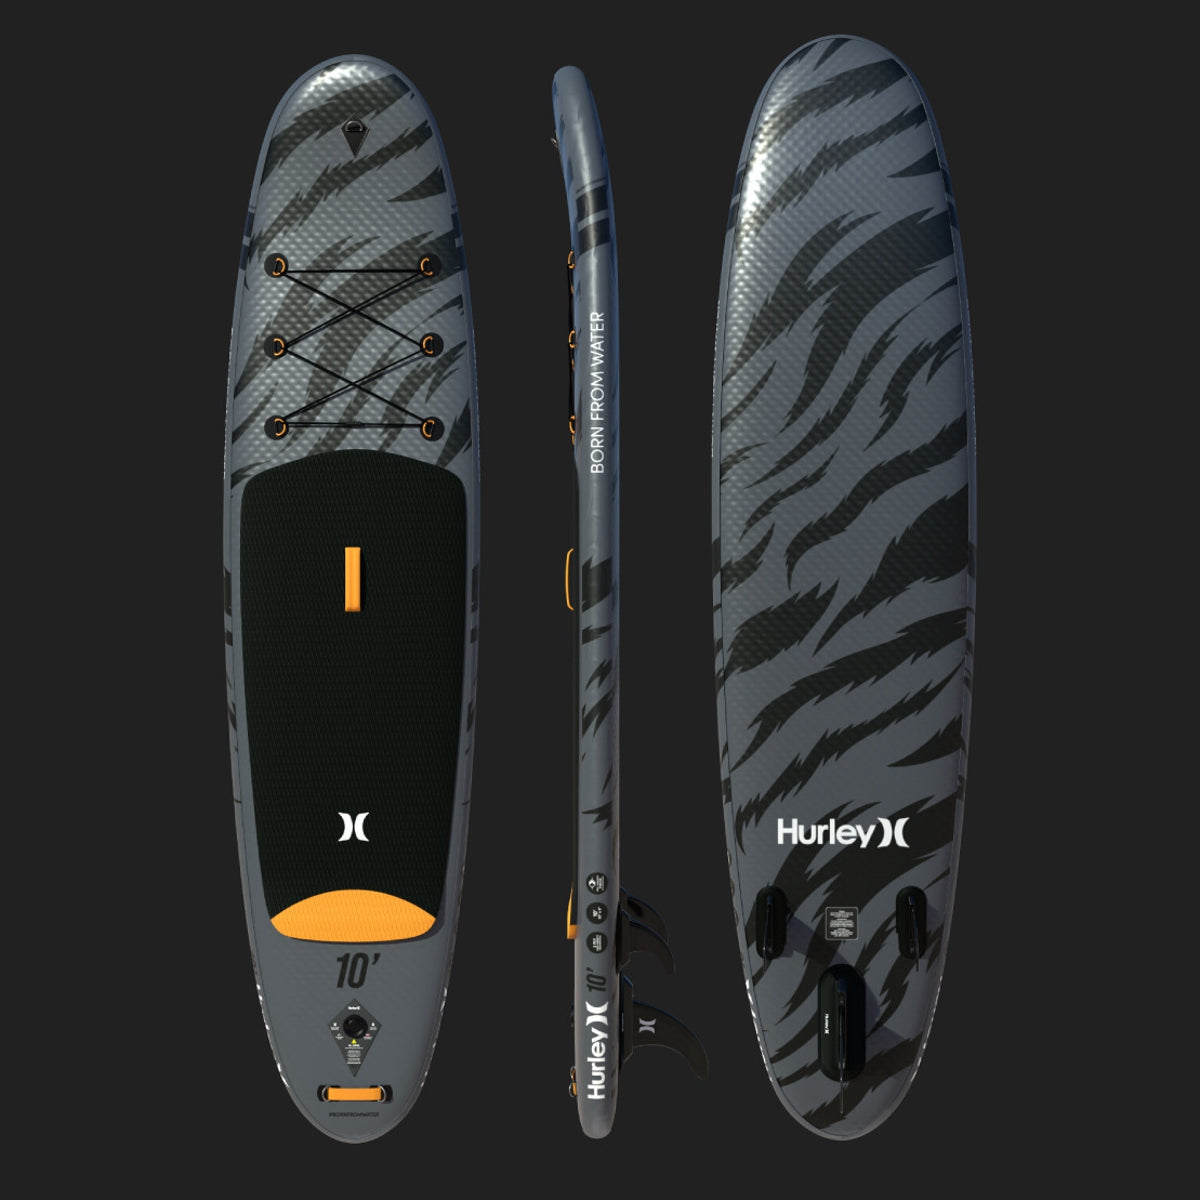 
                  
                    Hurley iSUP - Advantage 10' Inflatable Paddleboard Set - Black-Tiger
                  
                